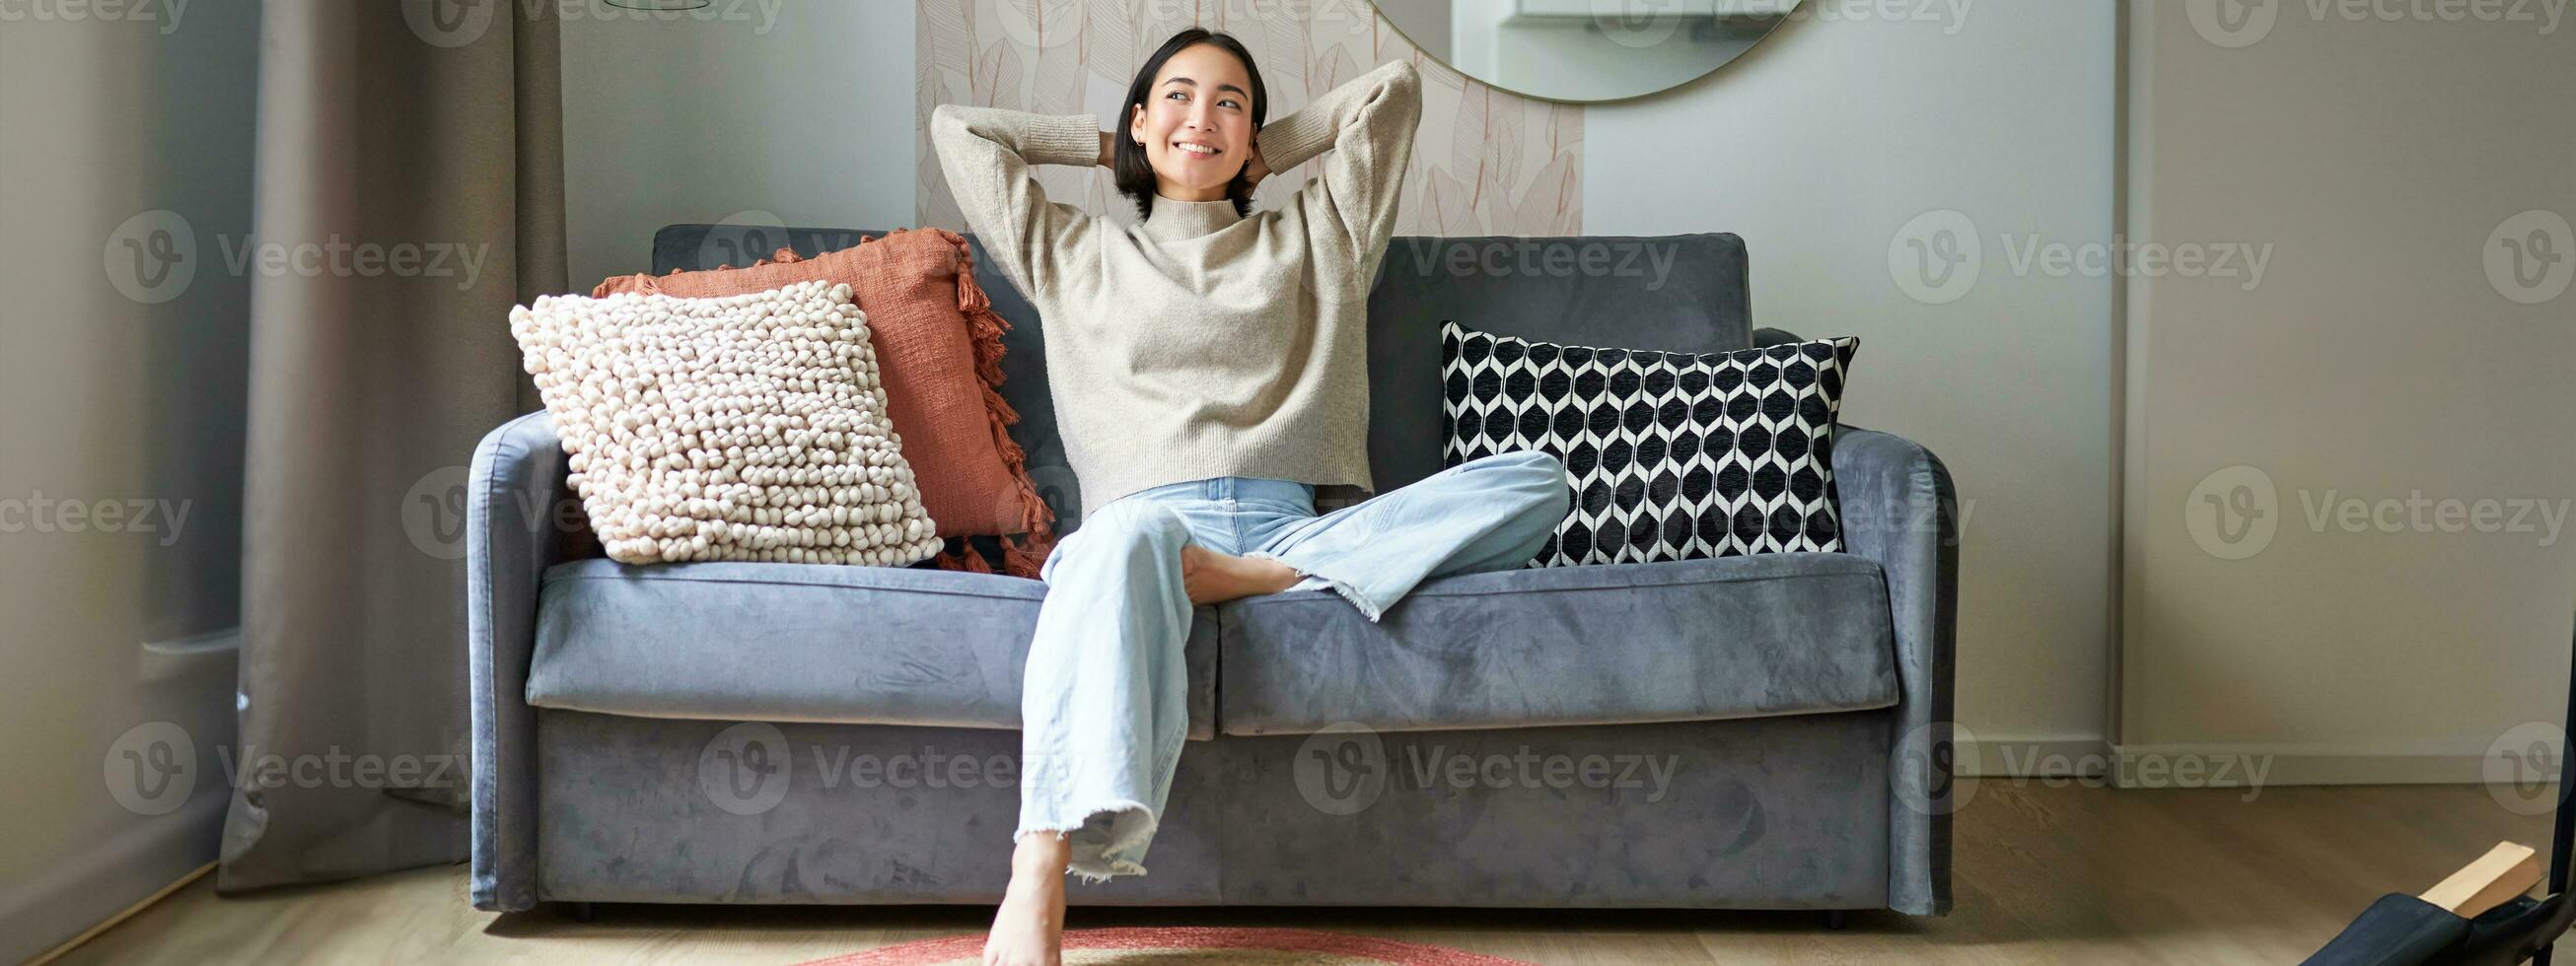 retrato de contento asiático mujer sensación perezoso, extensión en sofá y sonriente complacido, relajante a hogar, descansando desde trabajo foto